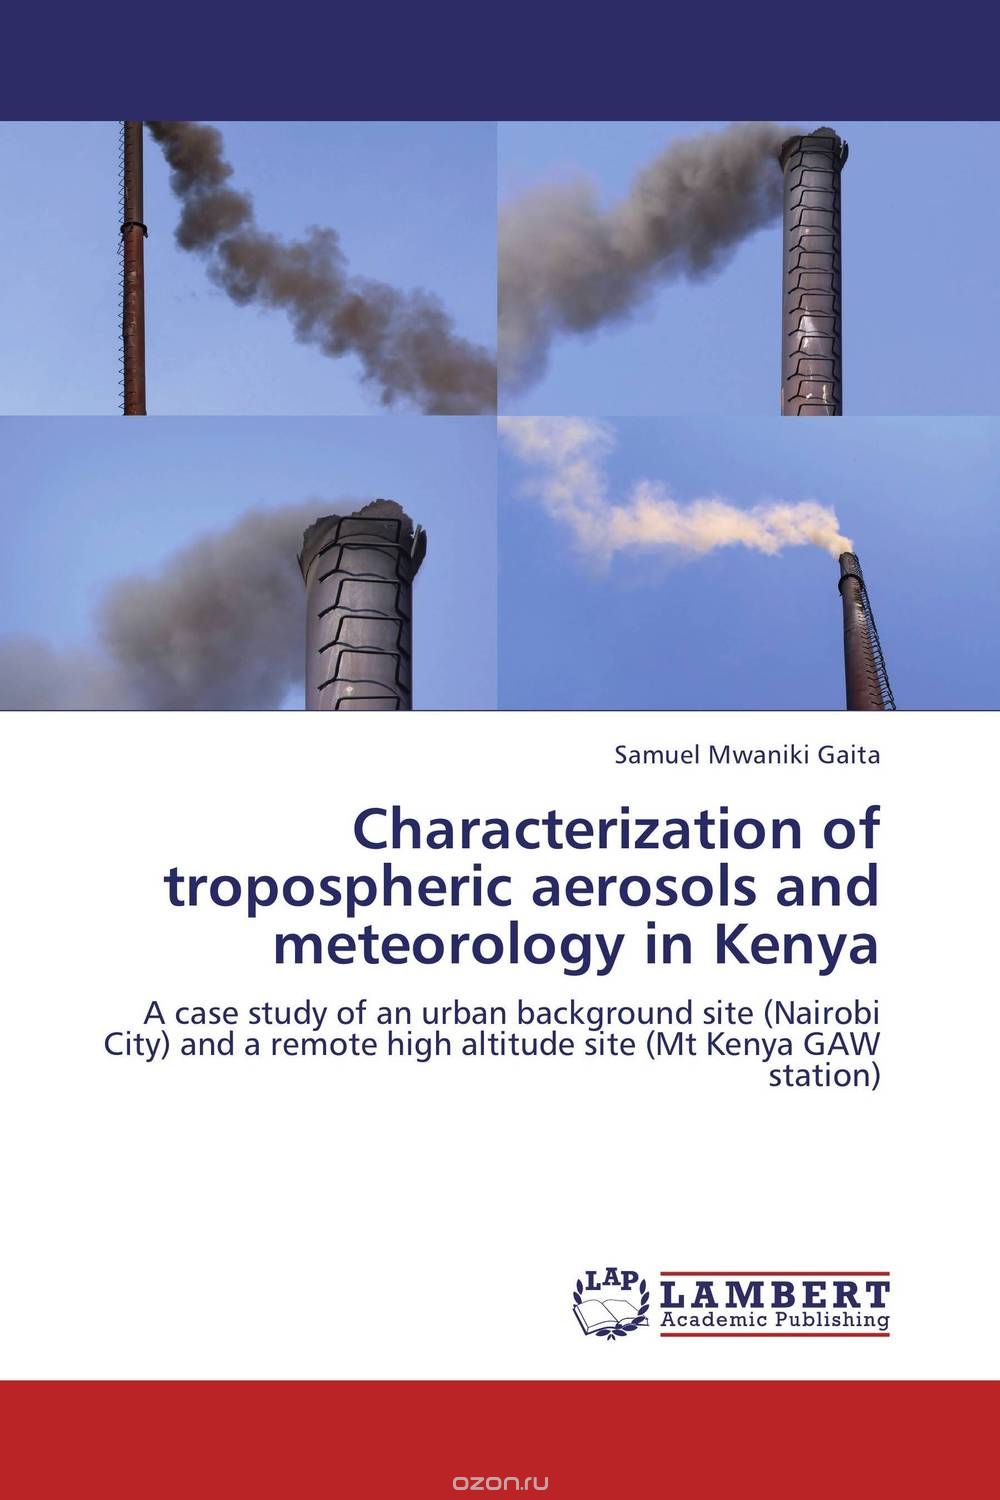 Скачать книгу "Characterization of tropospheric aerosols and meteorology in Kenya"